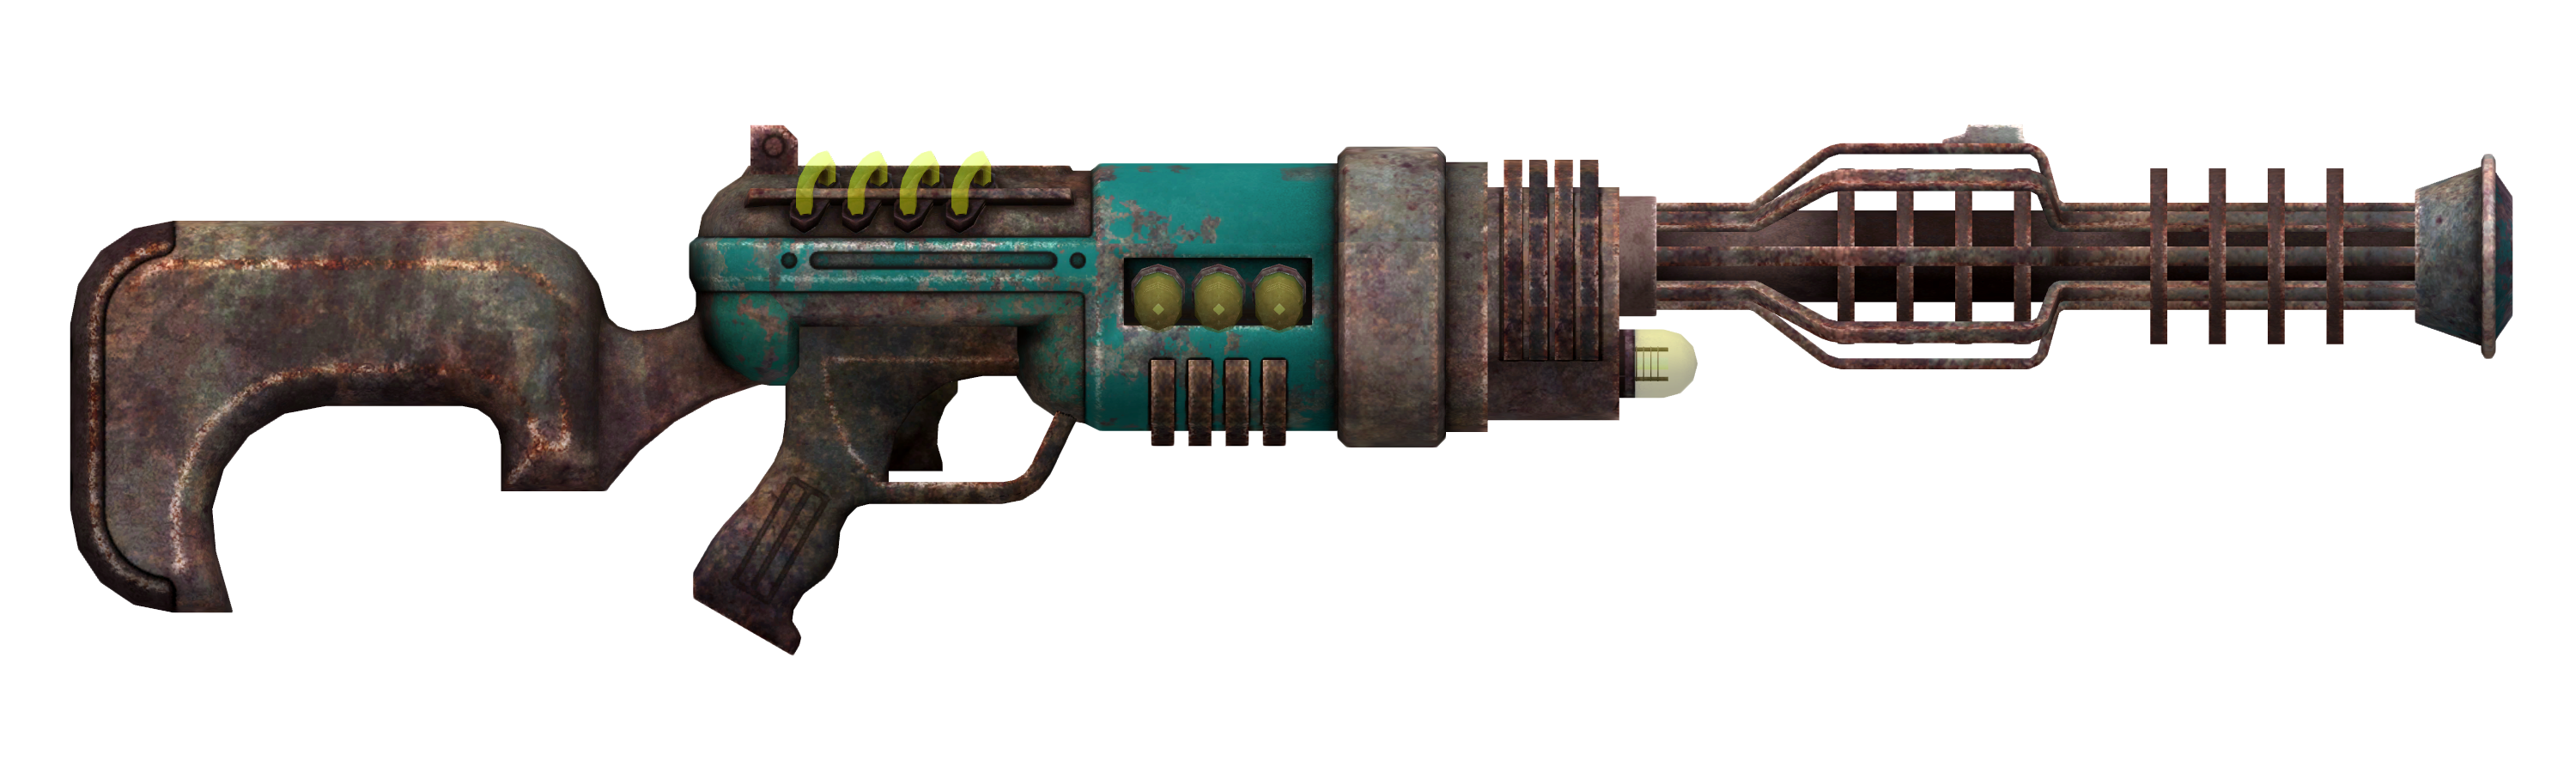 Fallout 4 recharger gun фото 4